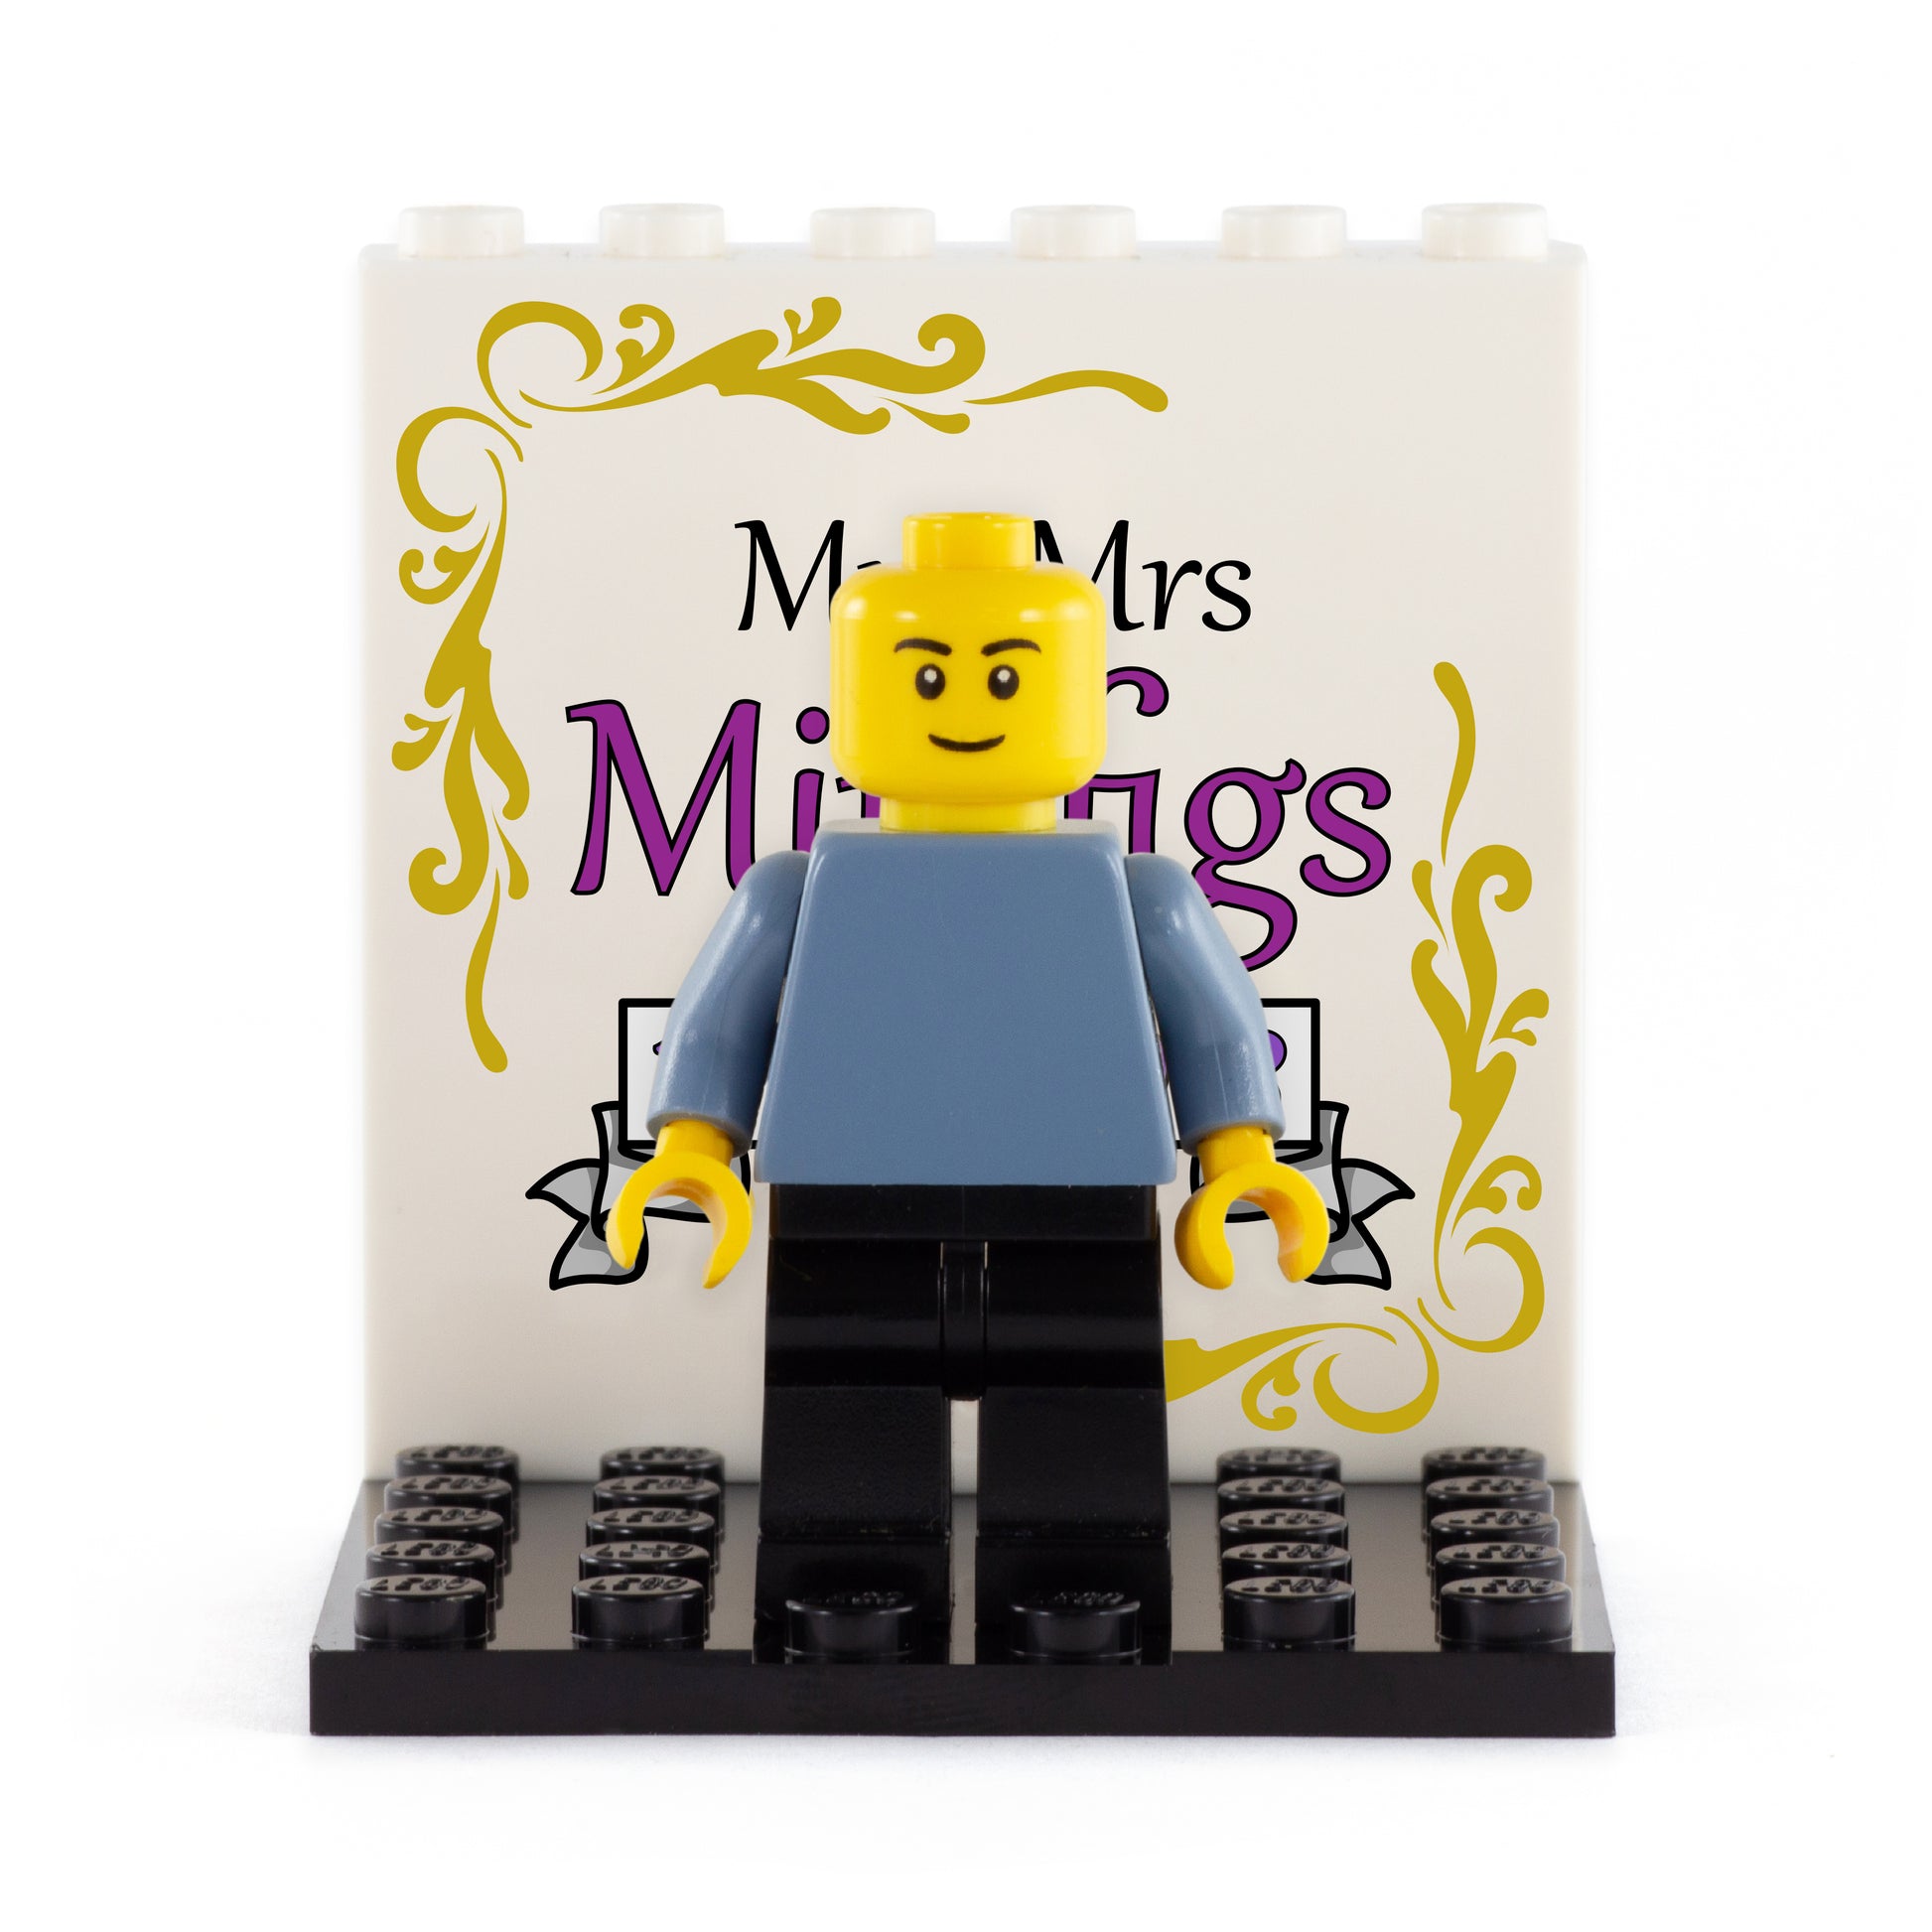 LEGO Personalised Wedding Back Panel with Decorative Edging custom design present